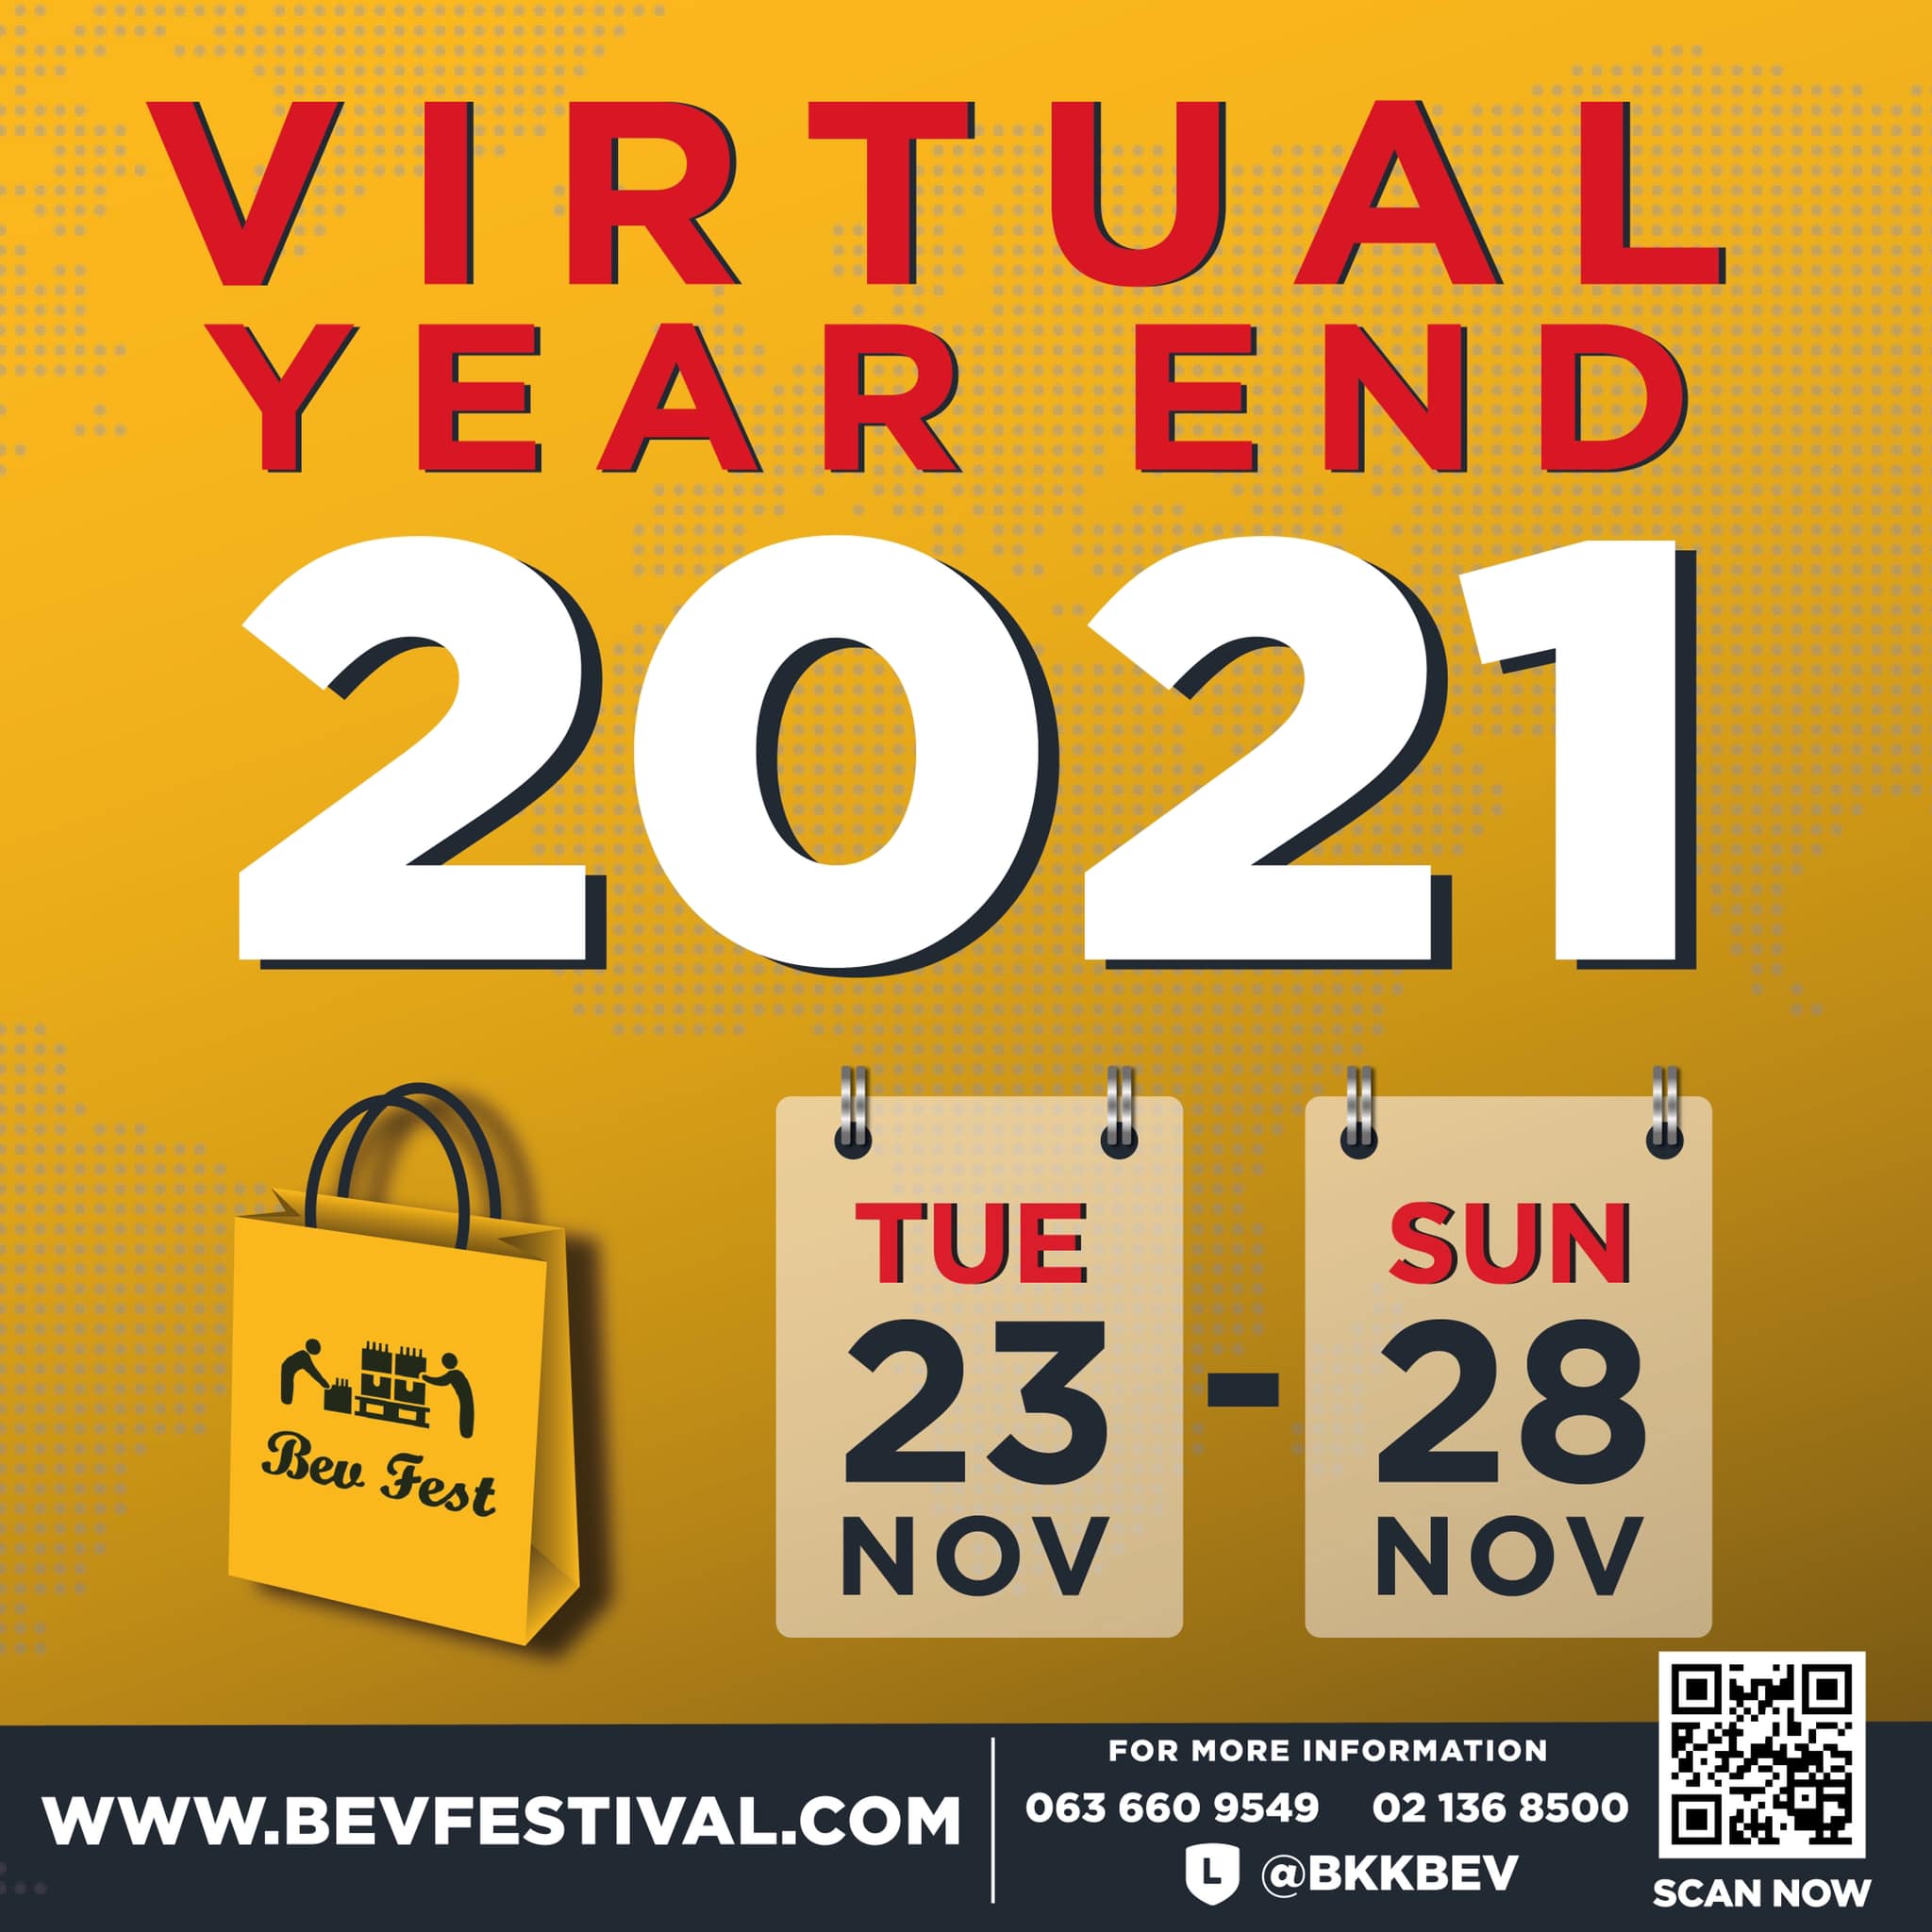 BB&B - VIRTUAL YEAR END 2021 